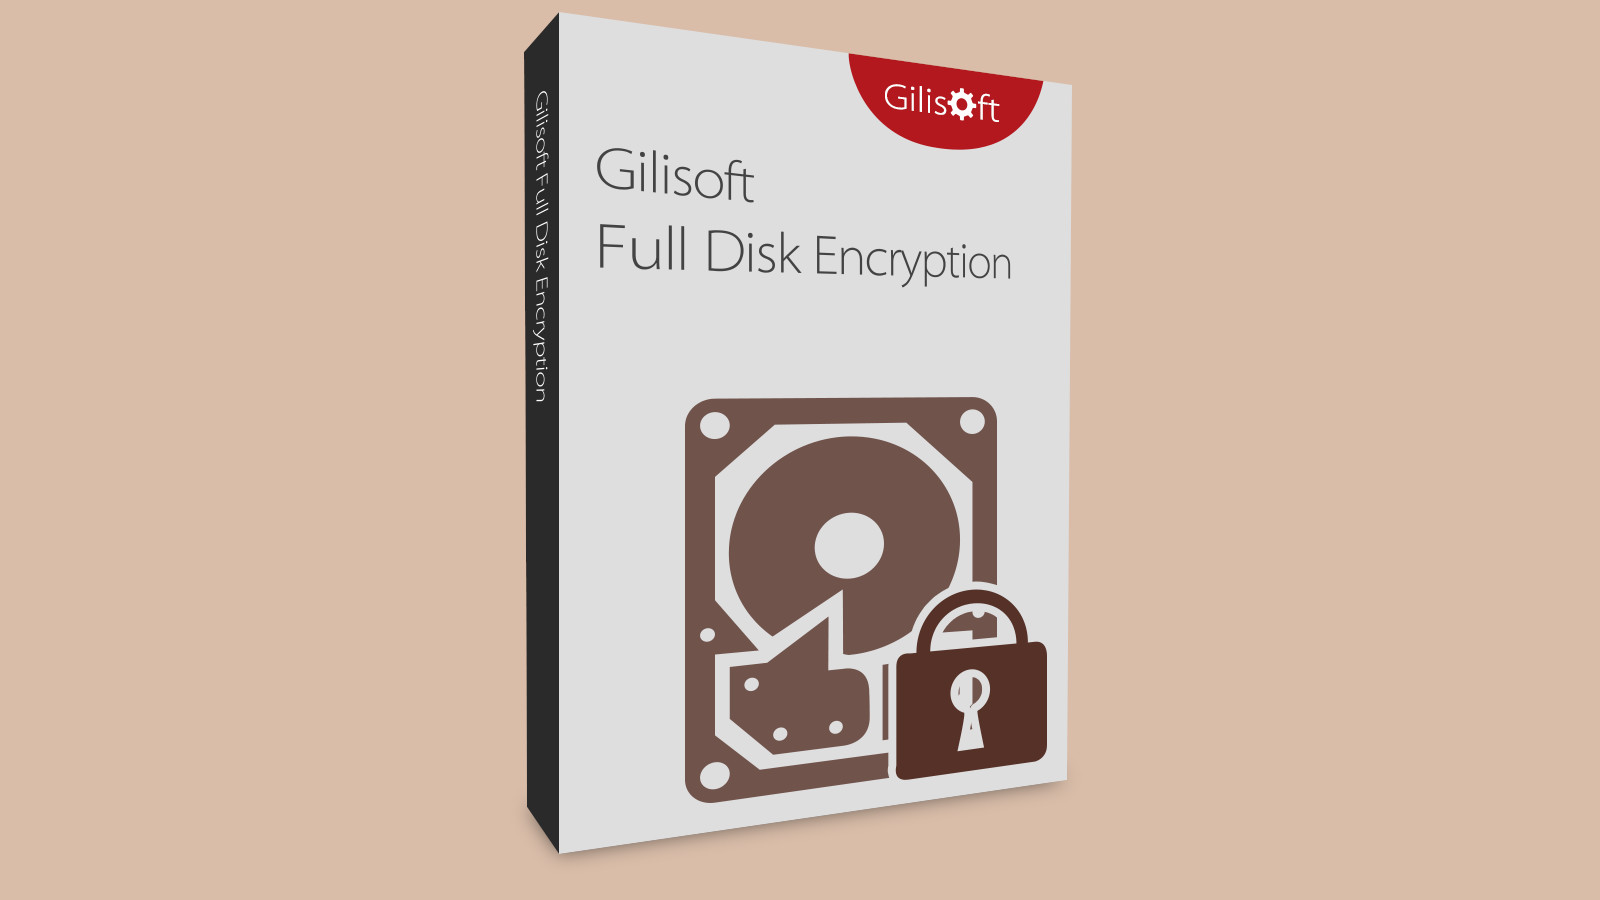 Gilisoft Full Disk Encryption CD Key $19.72